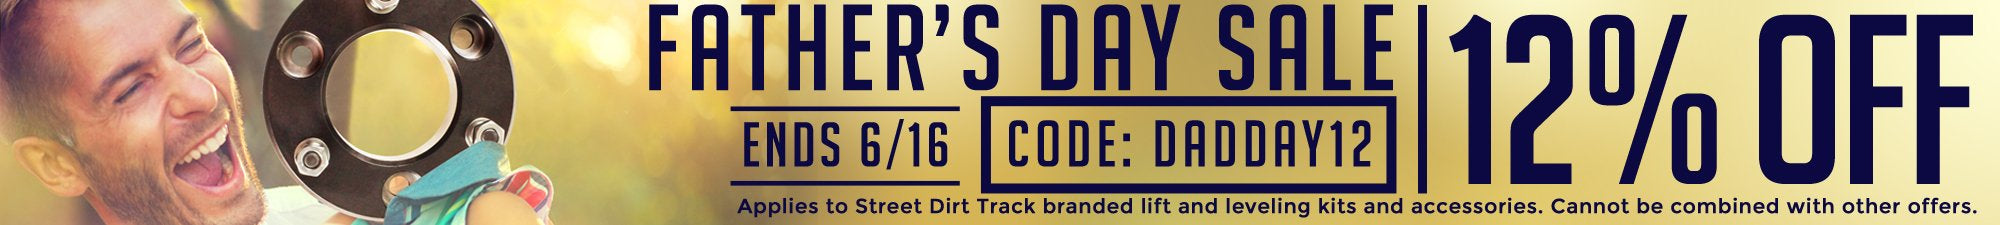 Street Dirt Track 2024 Memorial Day Sale